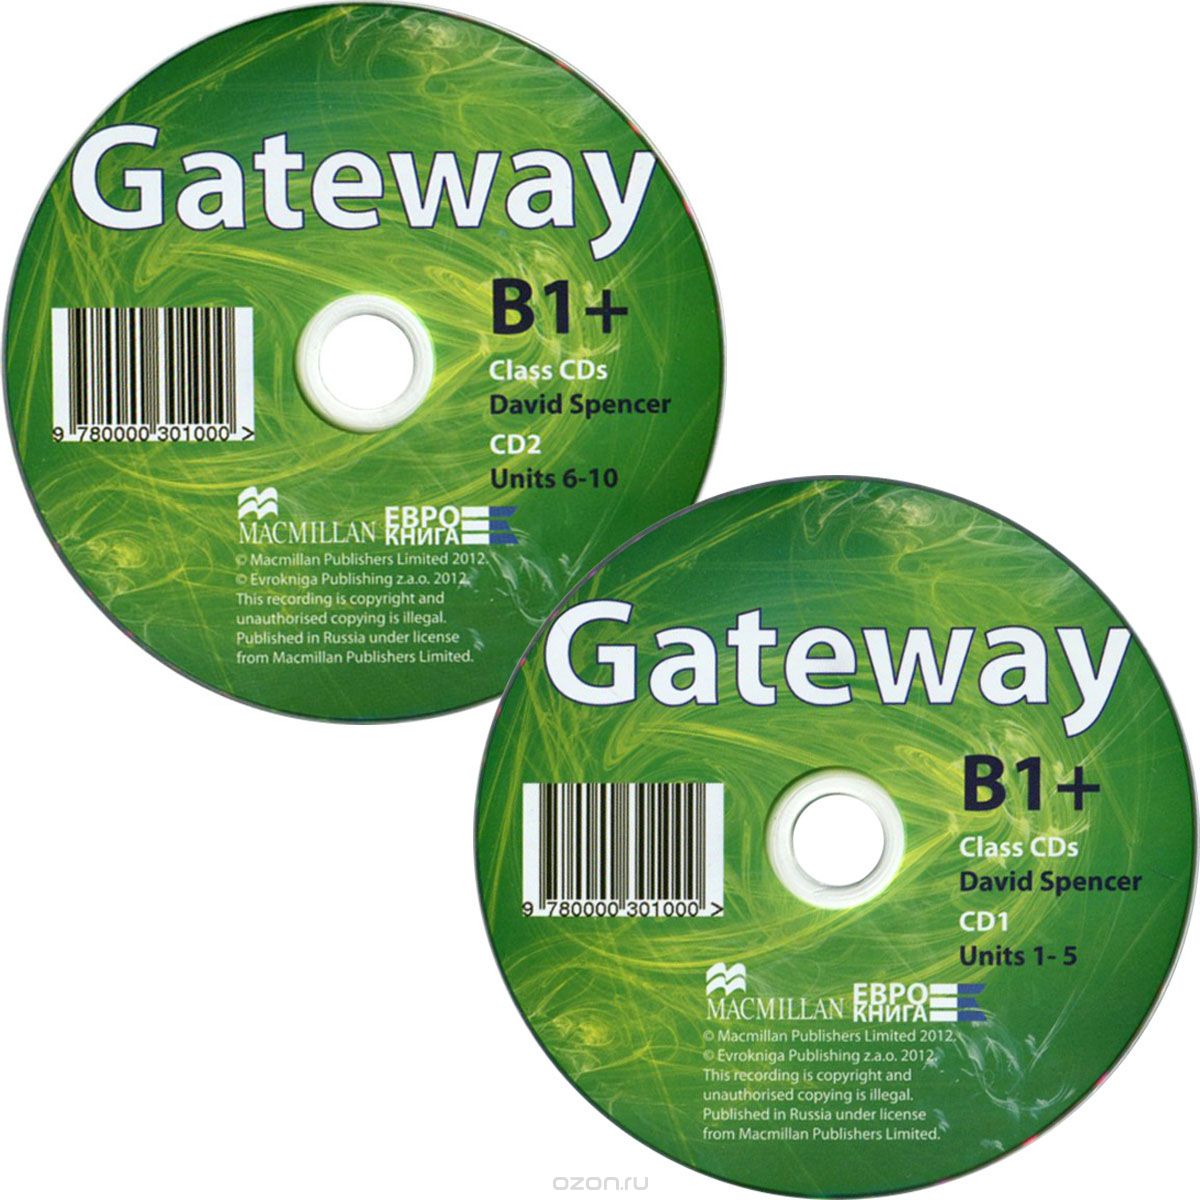 Скачать книгу "Gateway B1+: Class CDs (аудиокурс на 2 CD)"